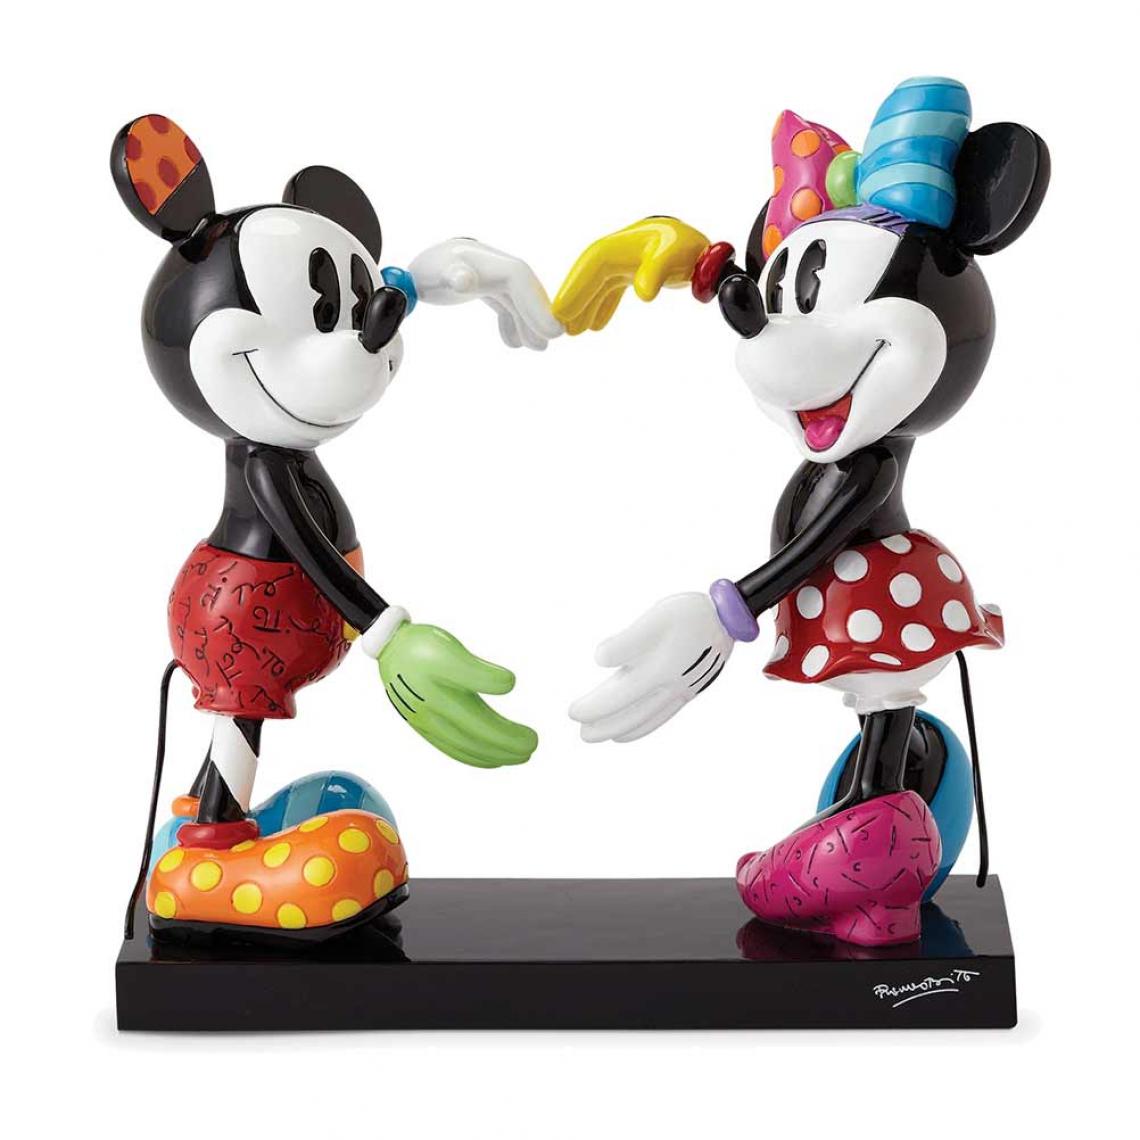 Enesco - Mickey et Minnie Figurine Collection by Romero Britto - Petite déco d'exterieur